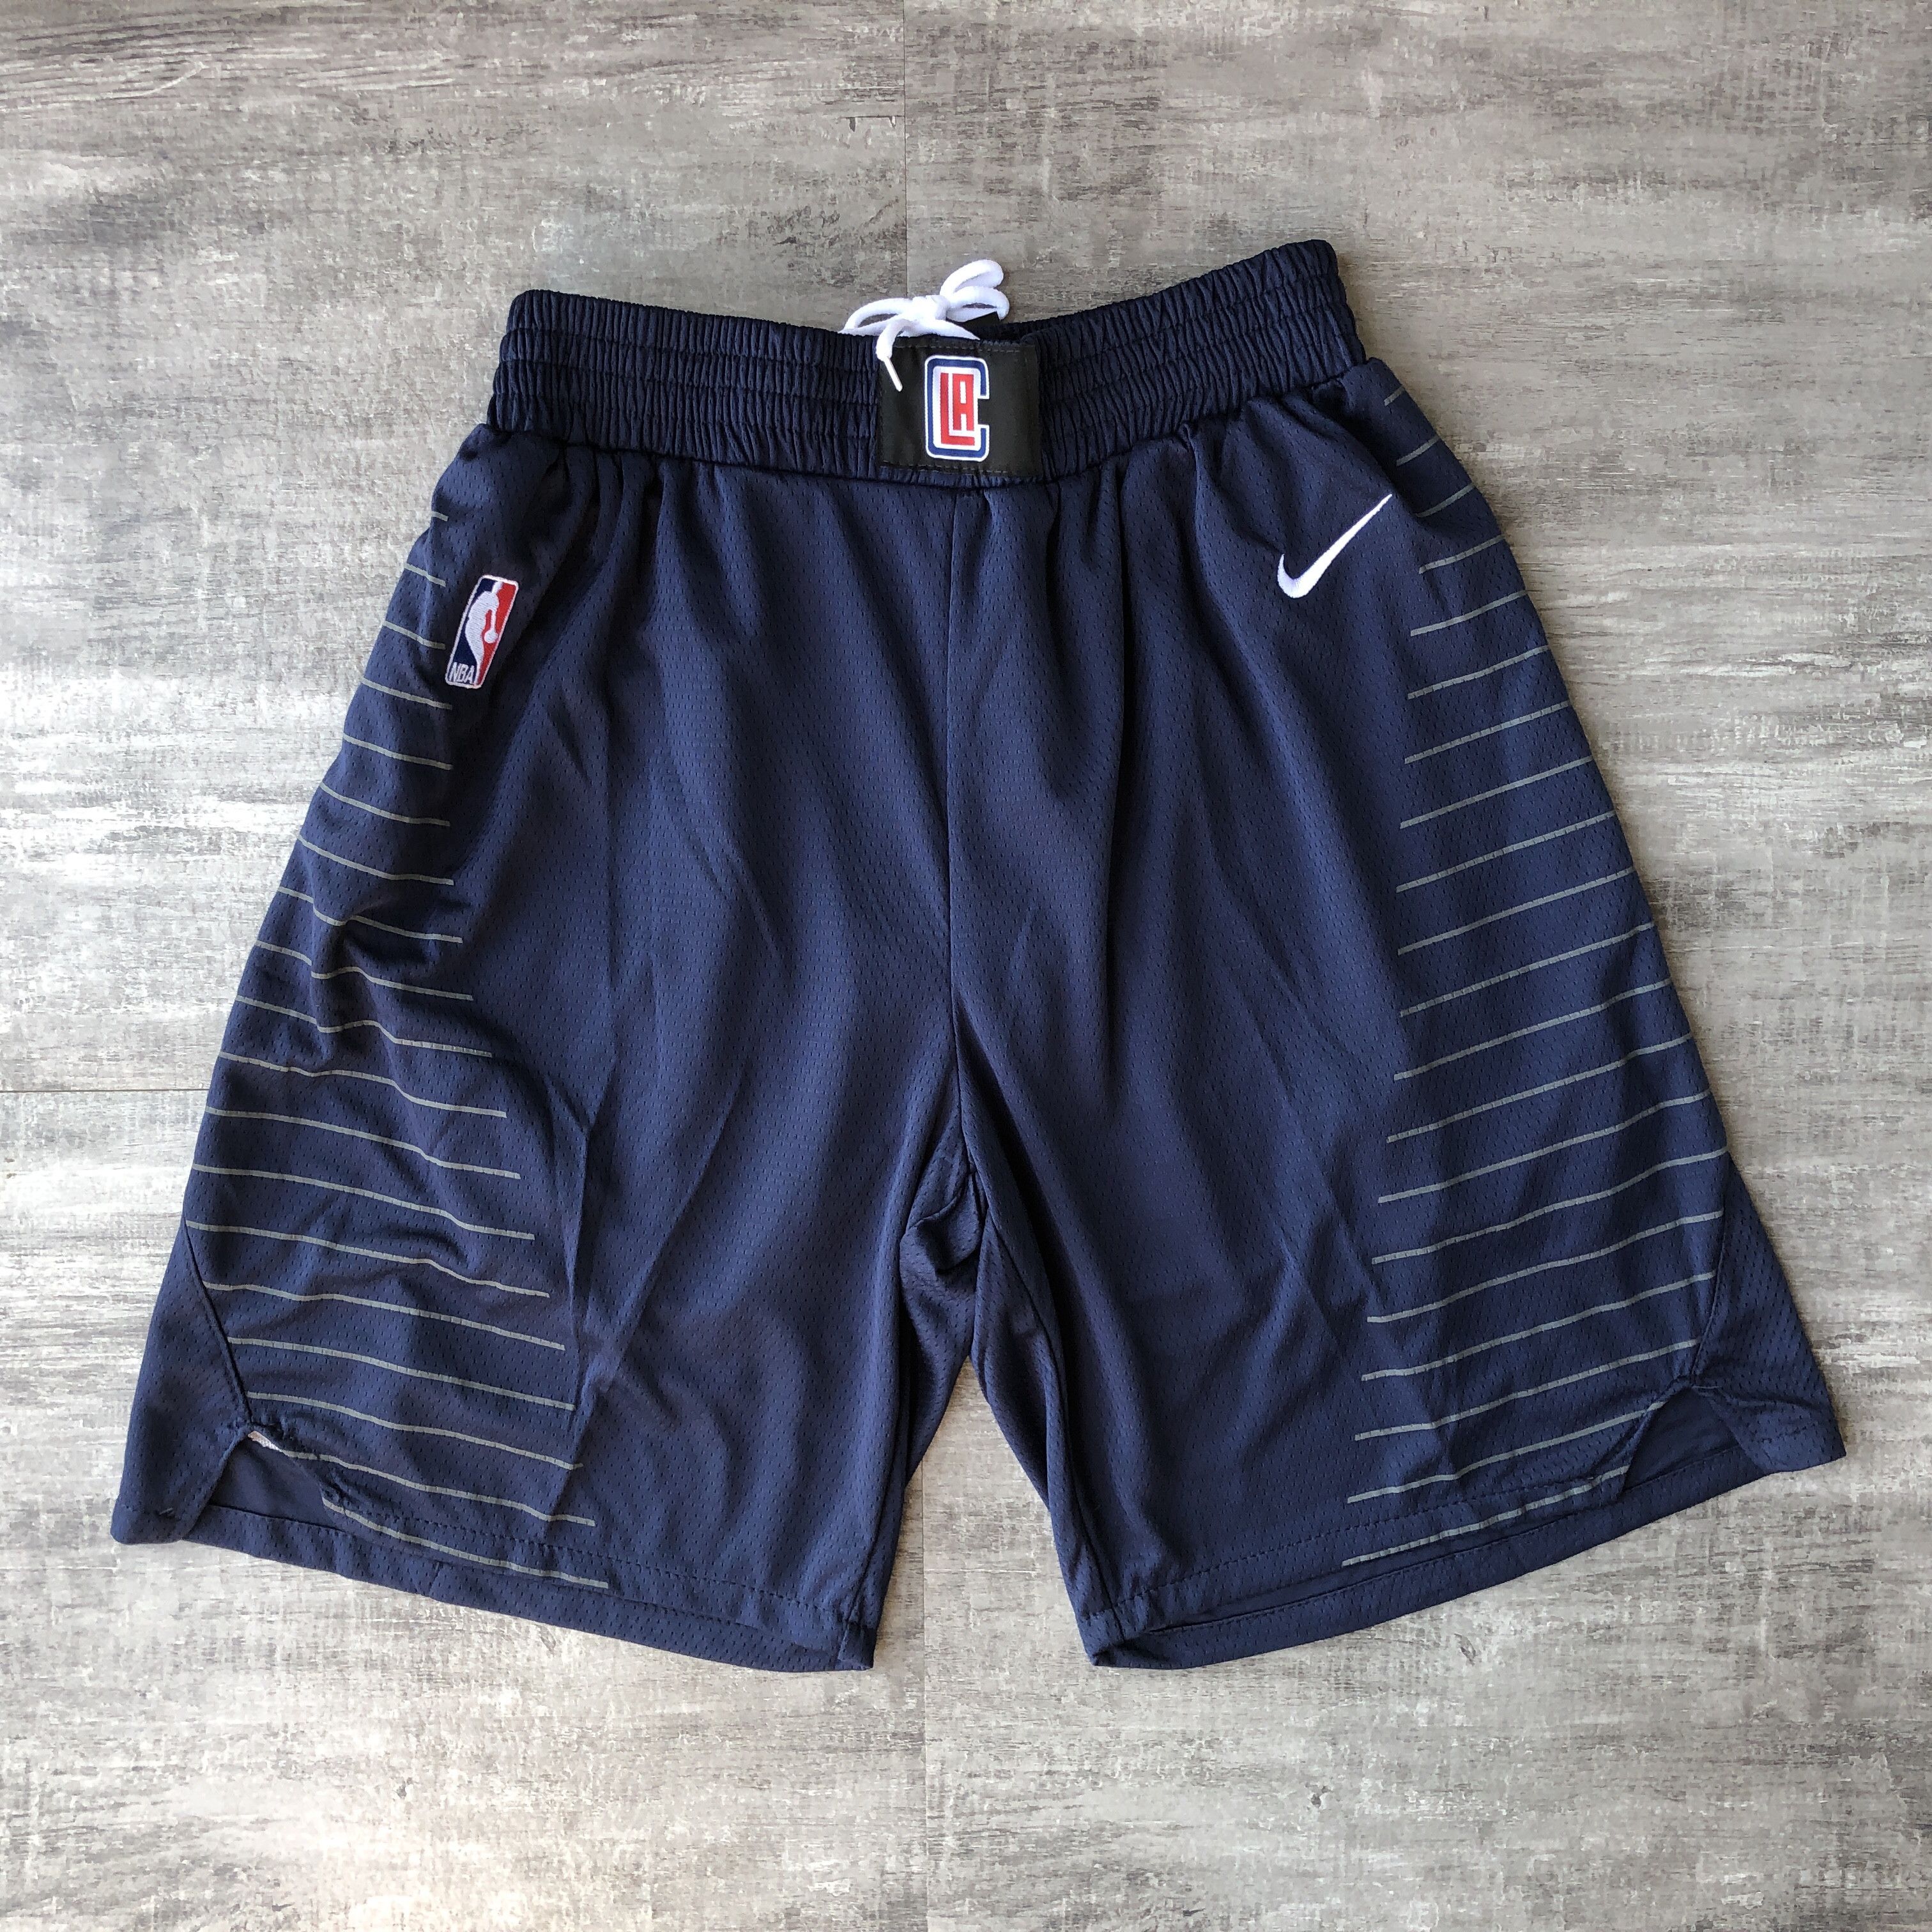 Cheap Men NBA Los Angeles Clippers navy blue Nike Shorts 0416